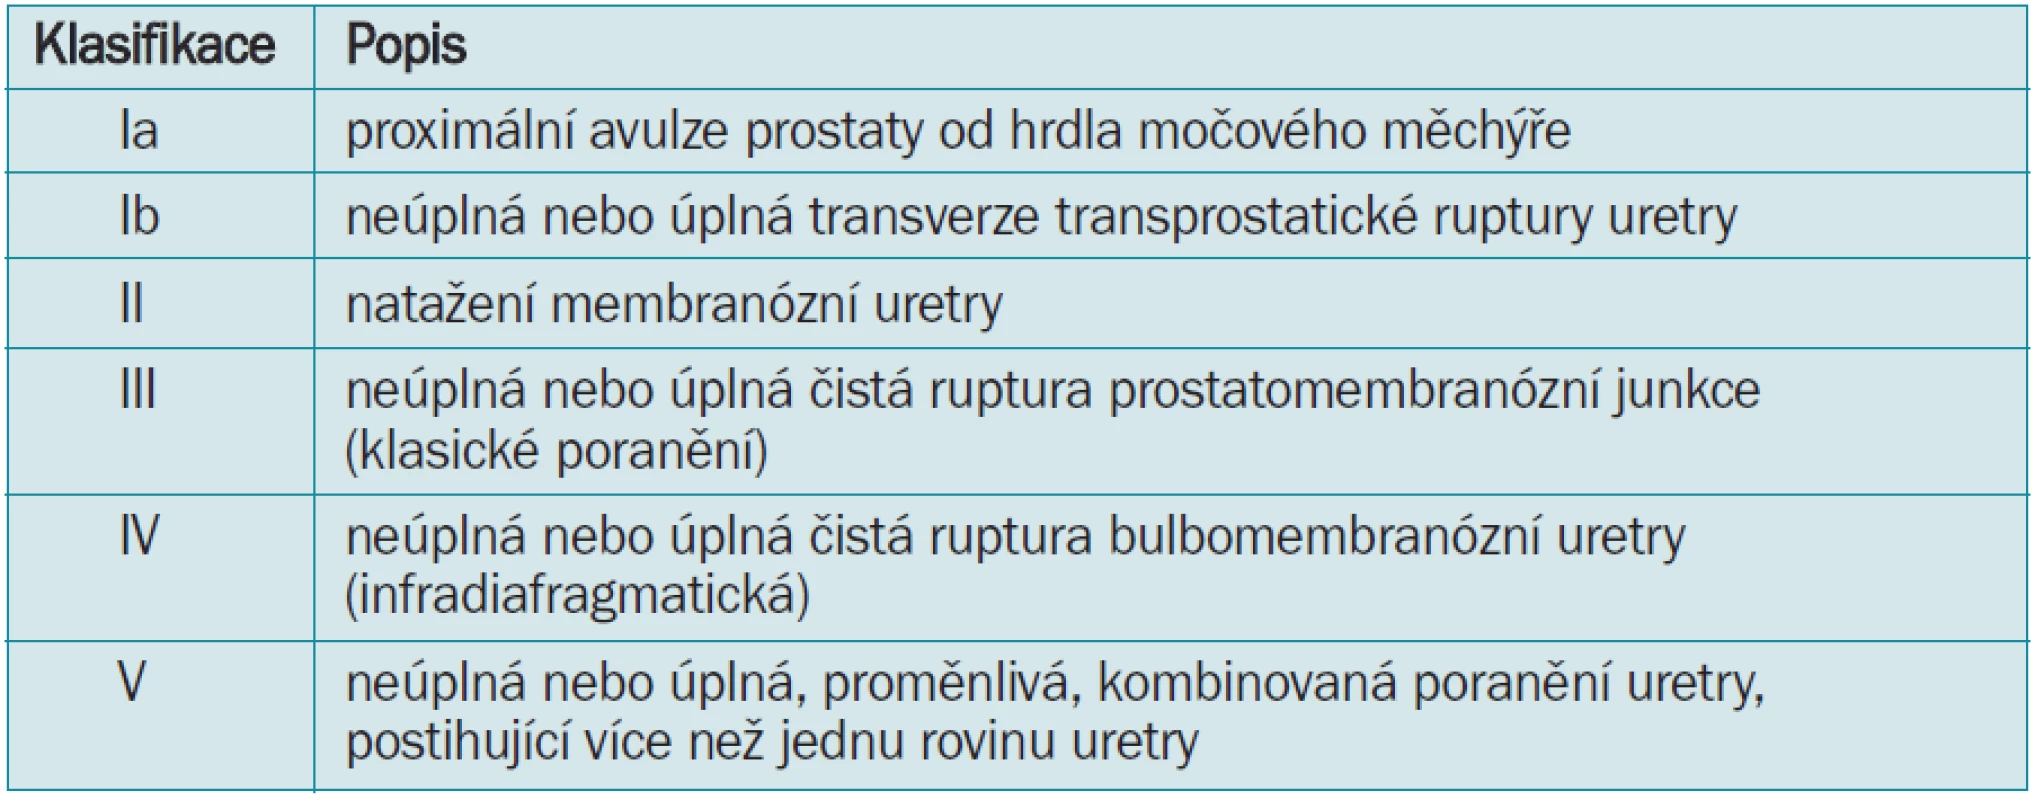 Klasifikace poranění uretry dle Al-Rifaei et al [27].